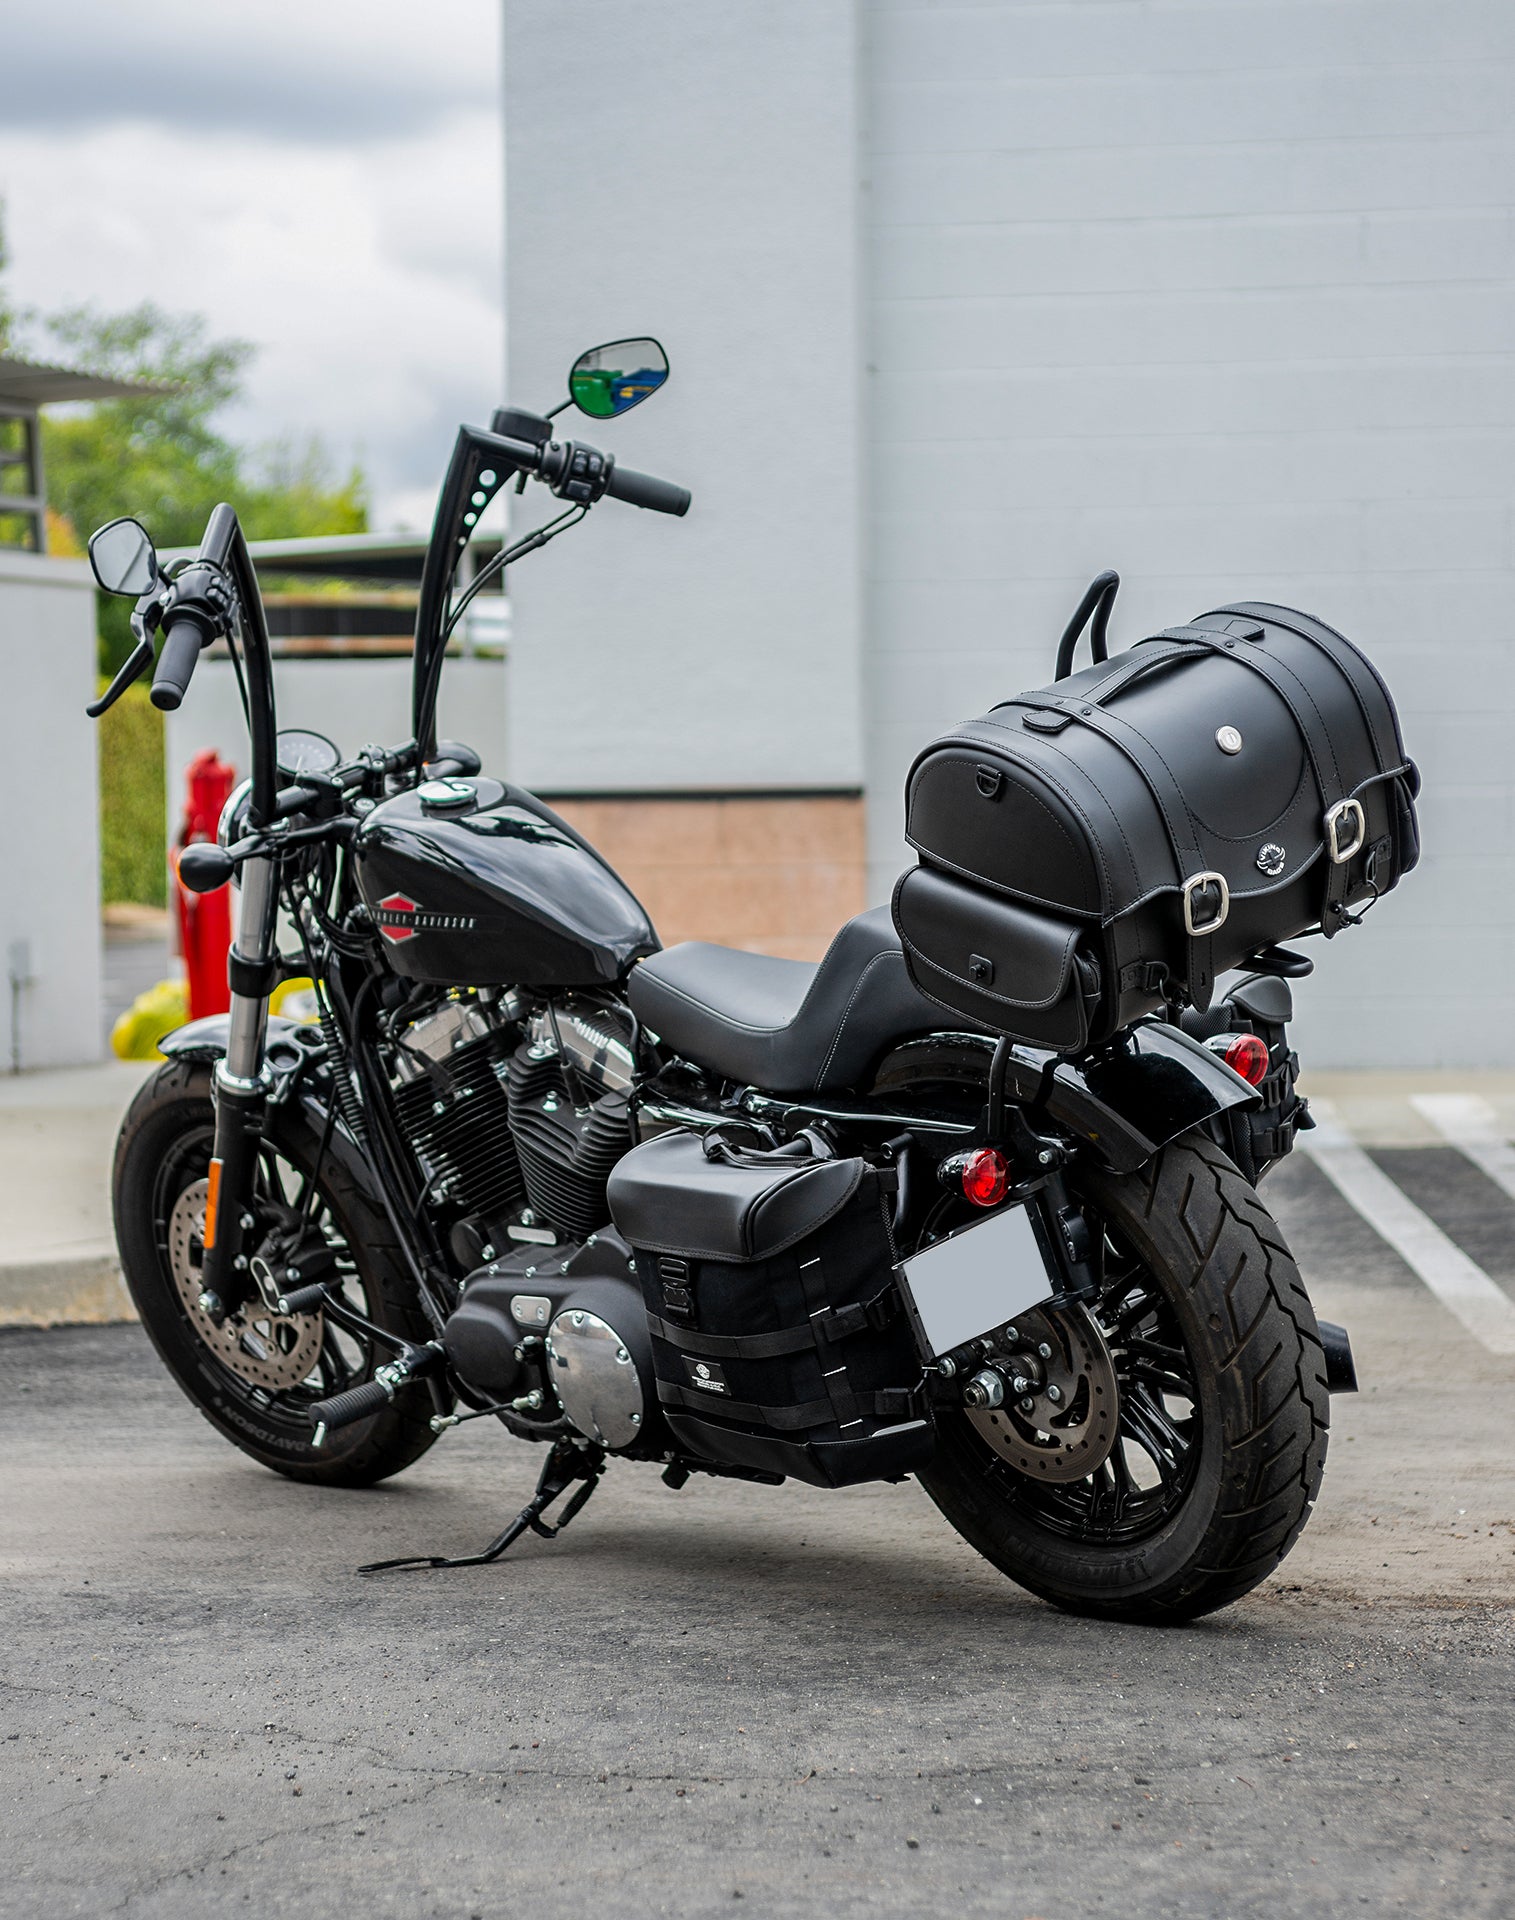 18L - Century Medium Leather Motorcycle Tail Bag